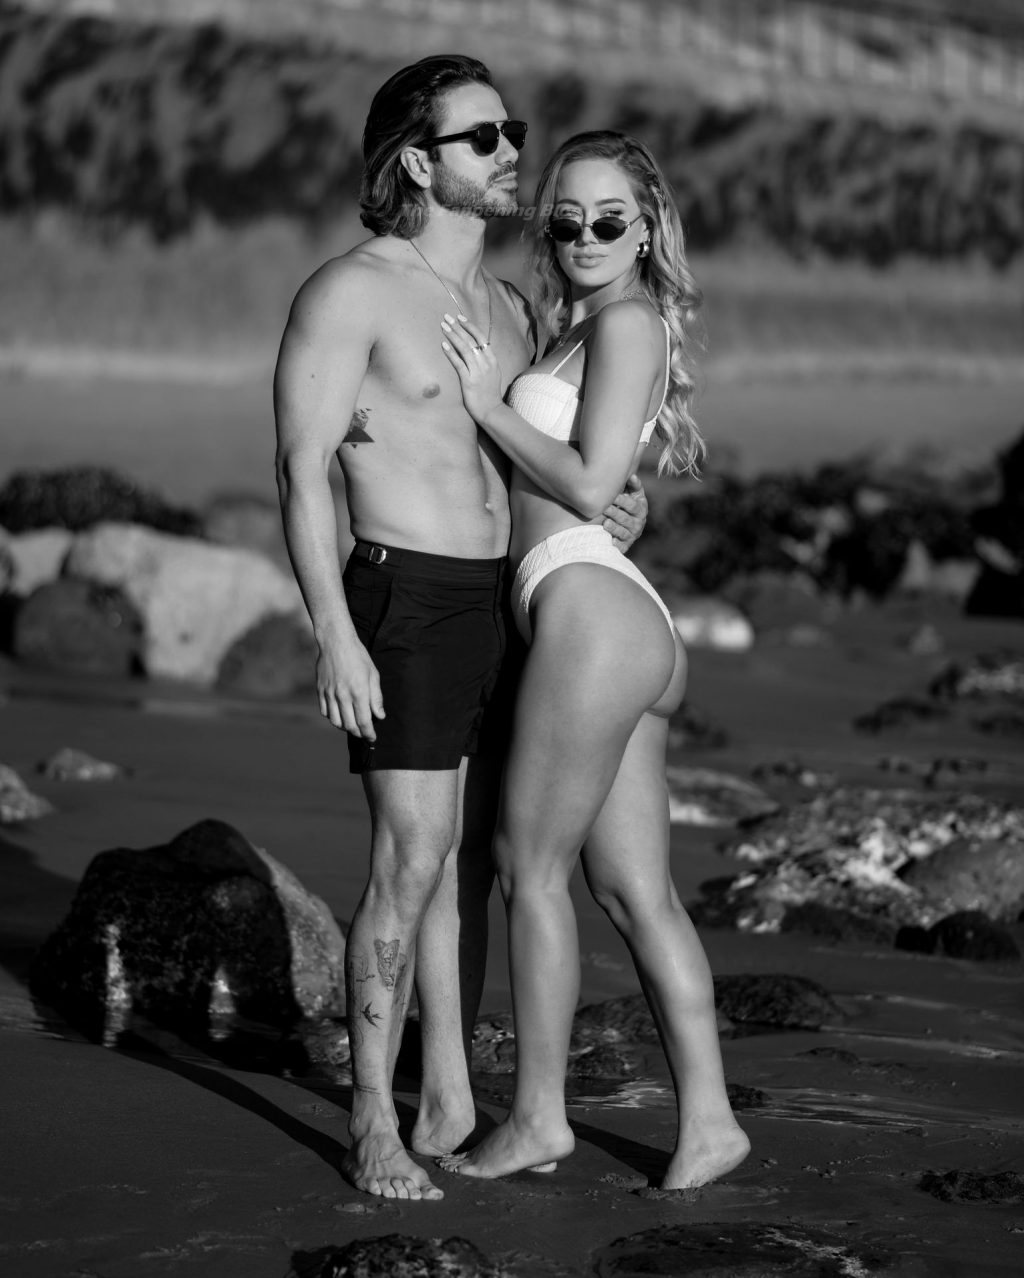 Sexy Robbi Jan Enjoys a Day with Alex Costa on the Beach (25 Photos)